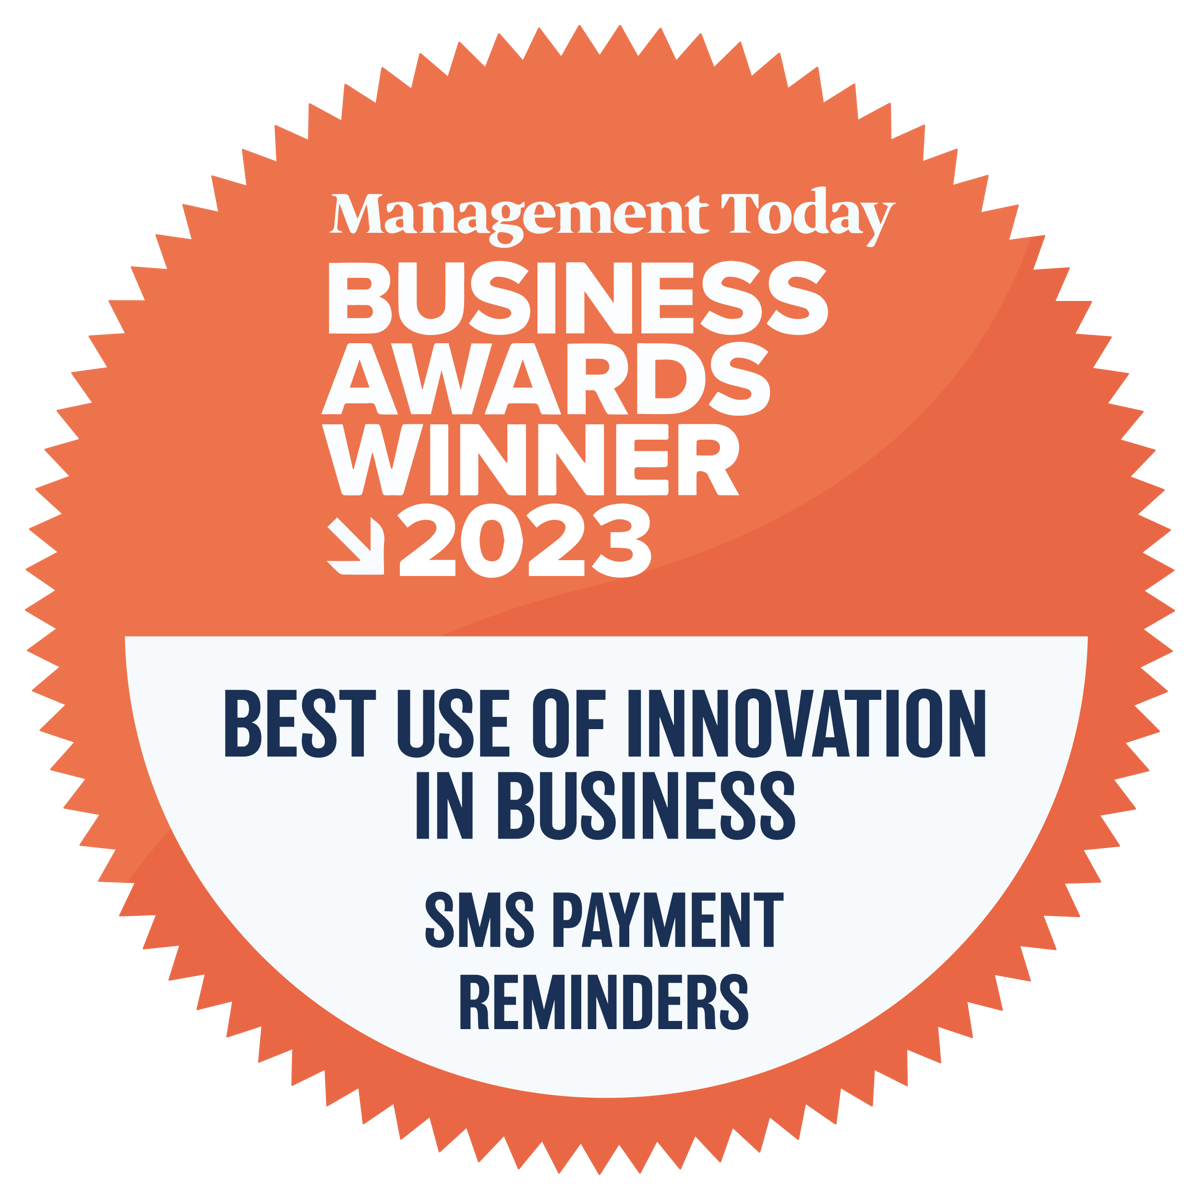 Management Today Business Awards Winner 2023